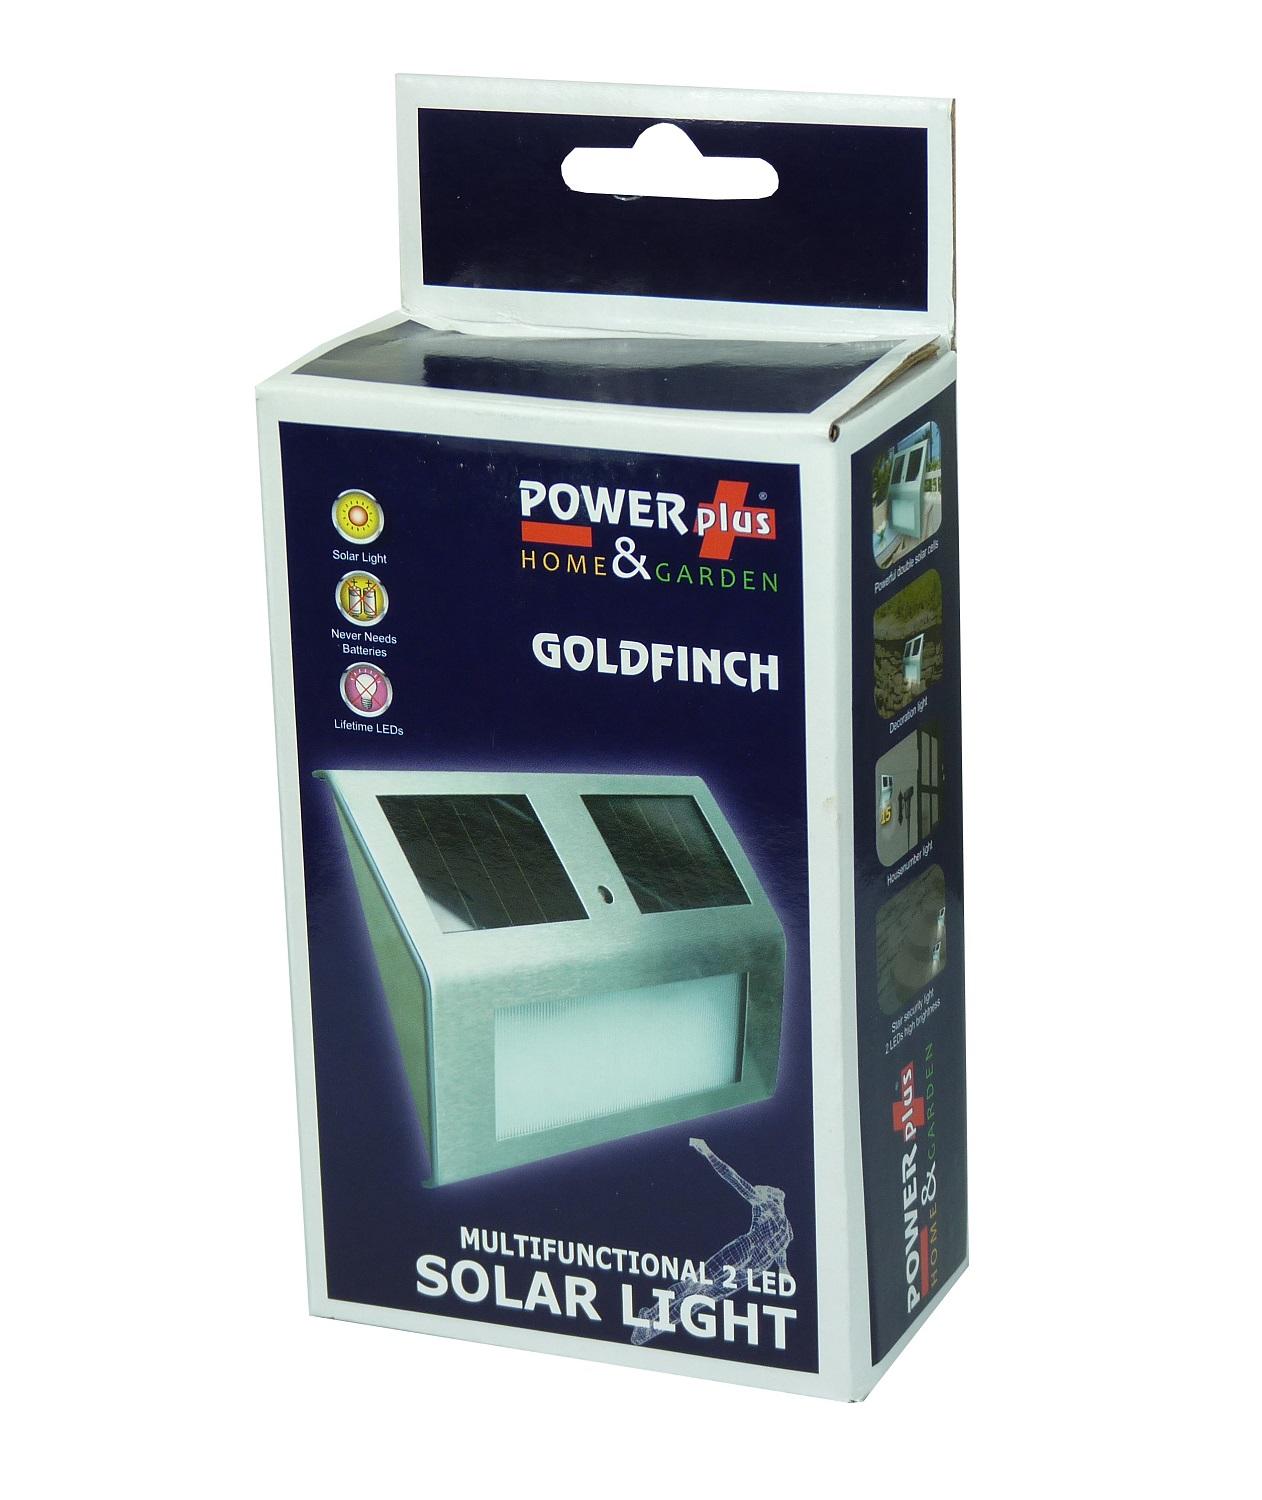 POWERplus Goldfinch Multifunctional LED Solar Light